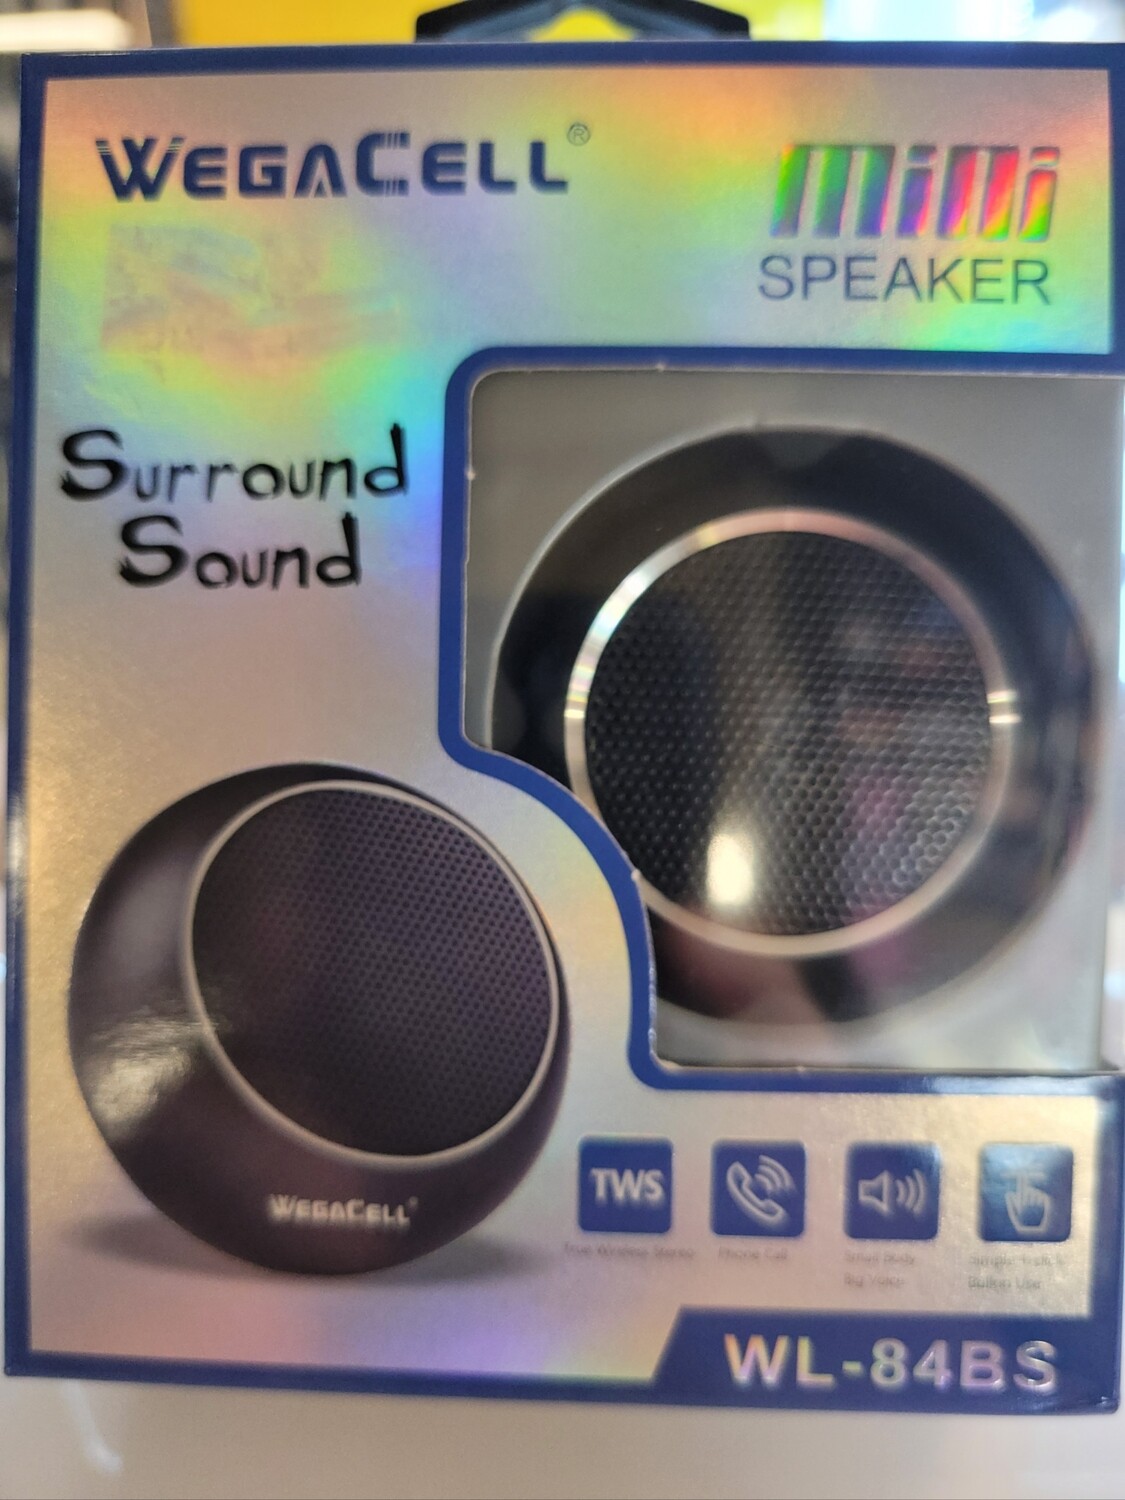 WegaCell Mini Speaker Surrond Sound